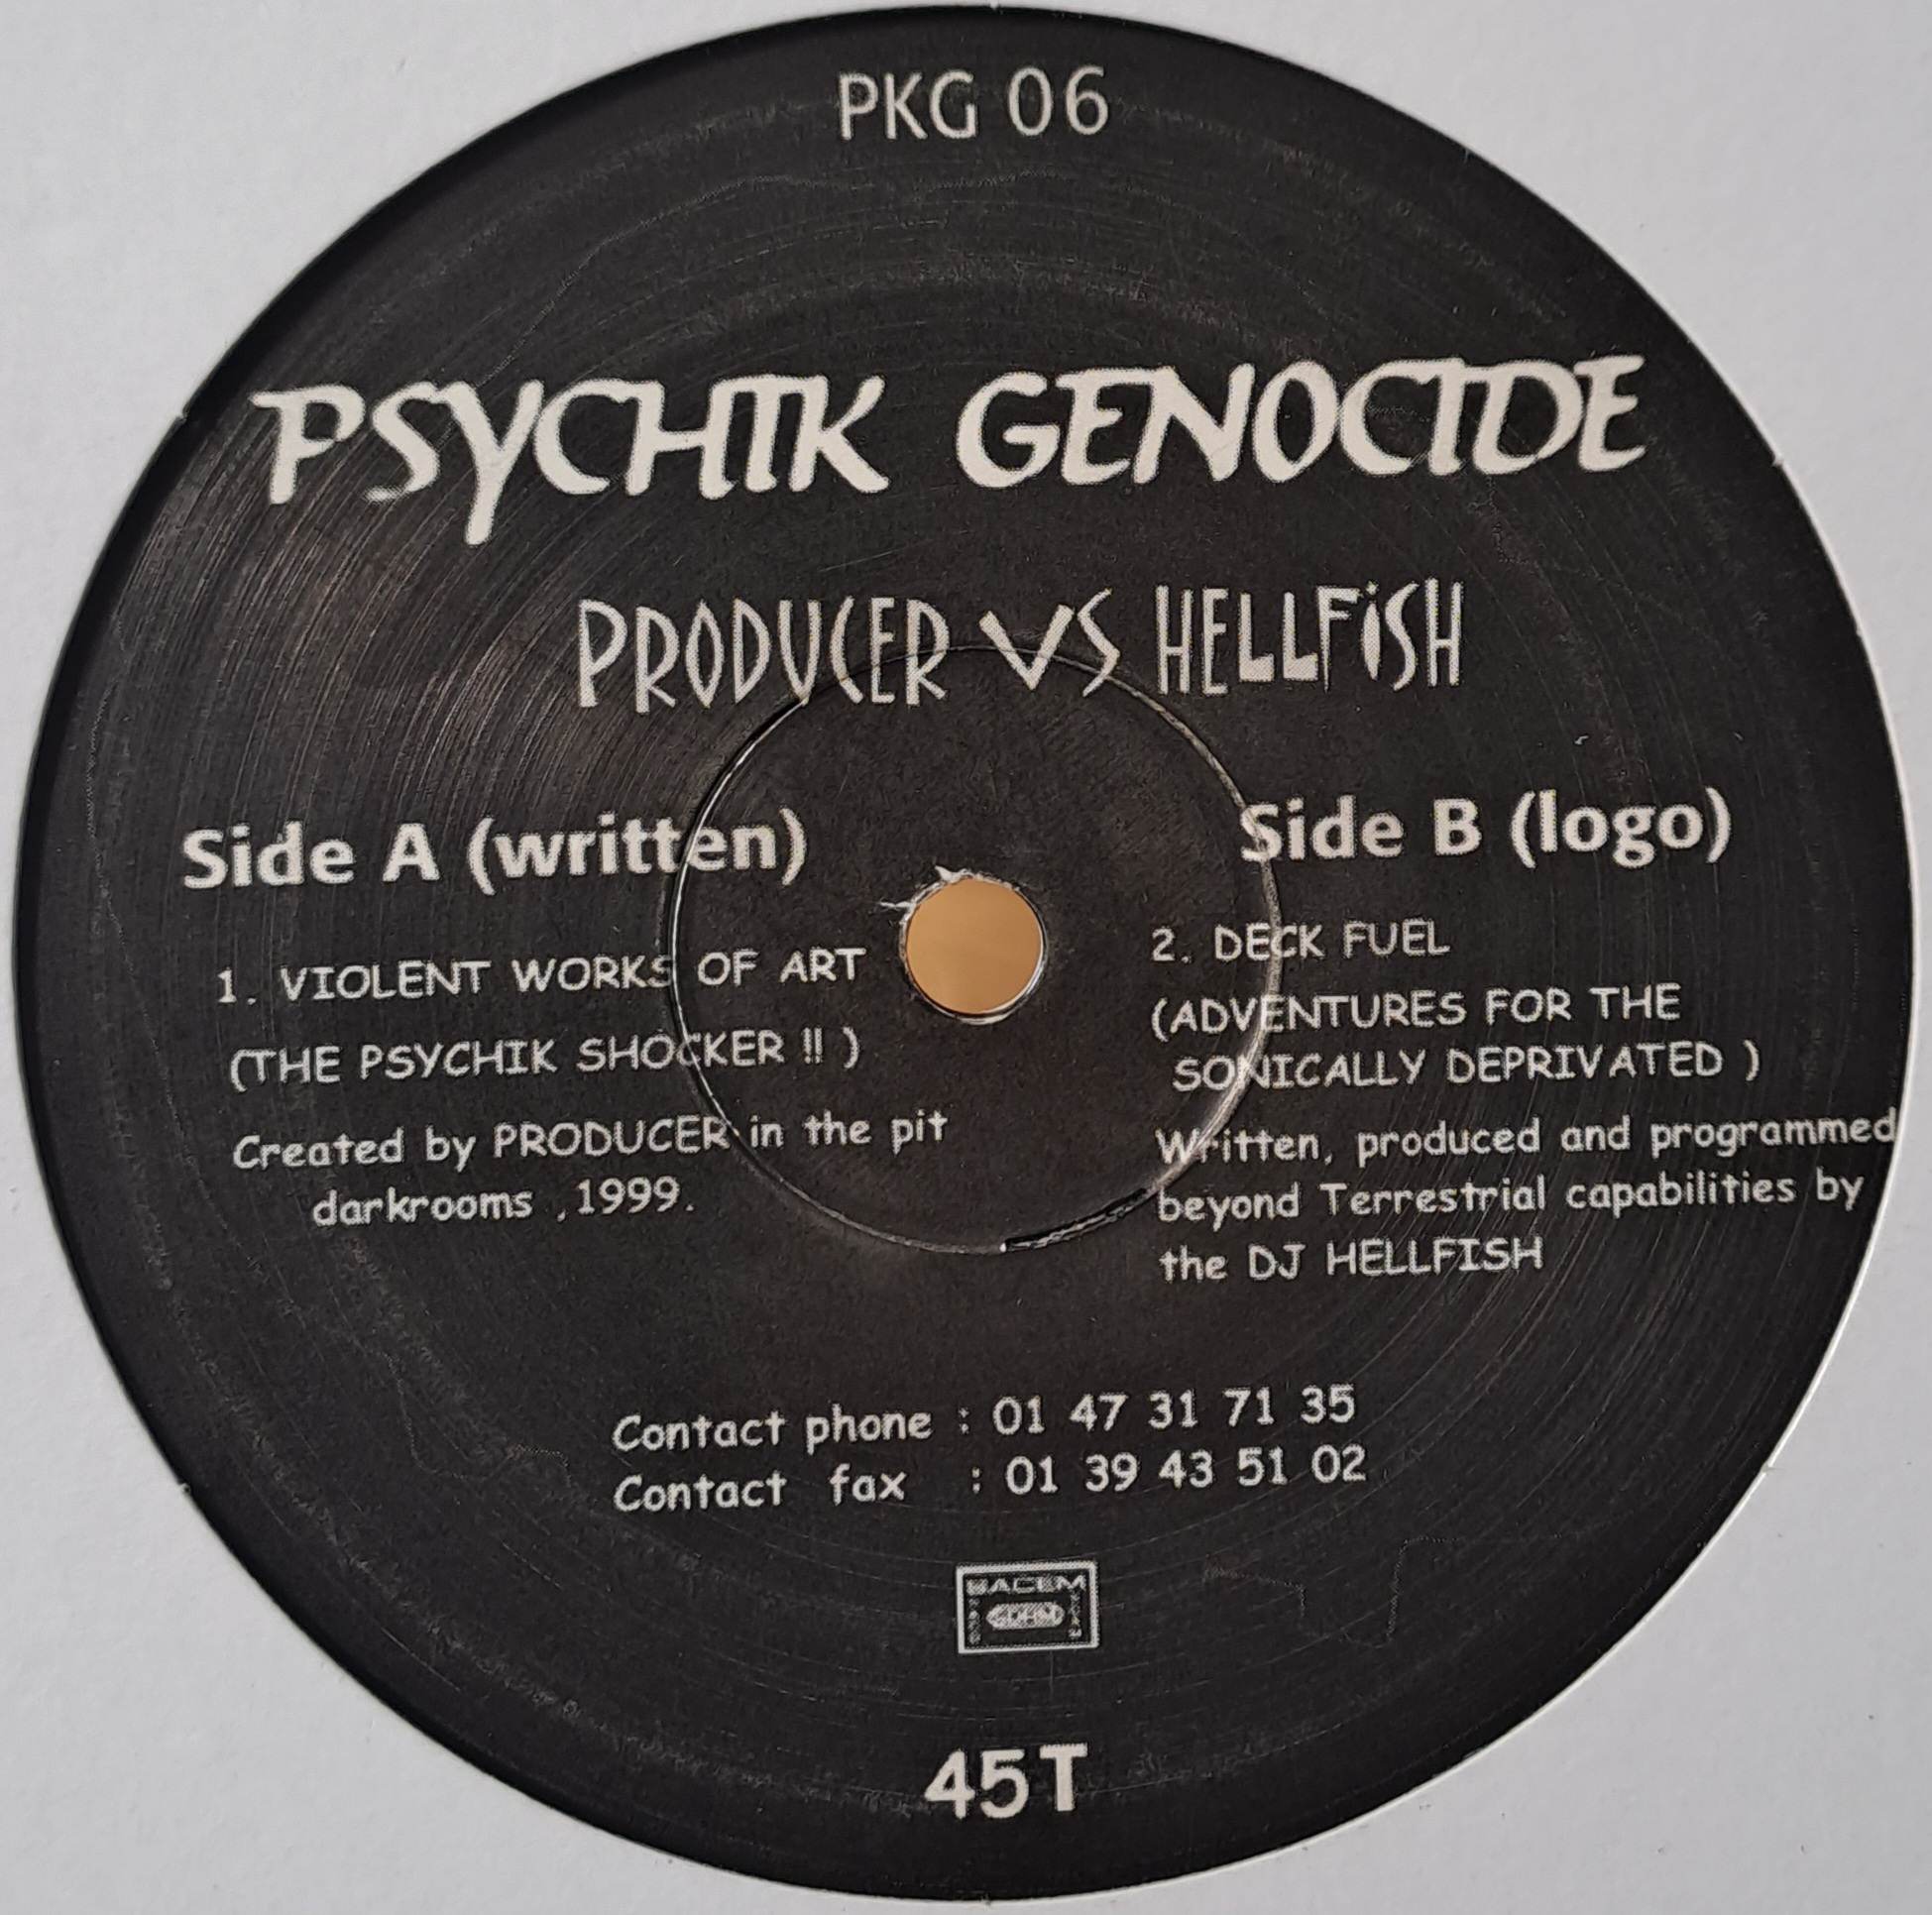 1) Psychik Genocide 06 - vinyle hardcore